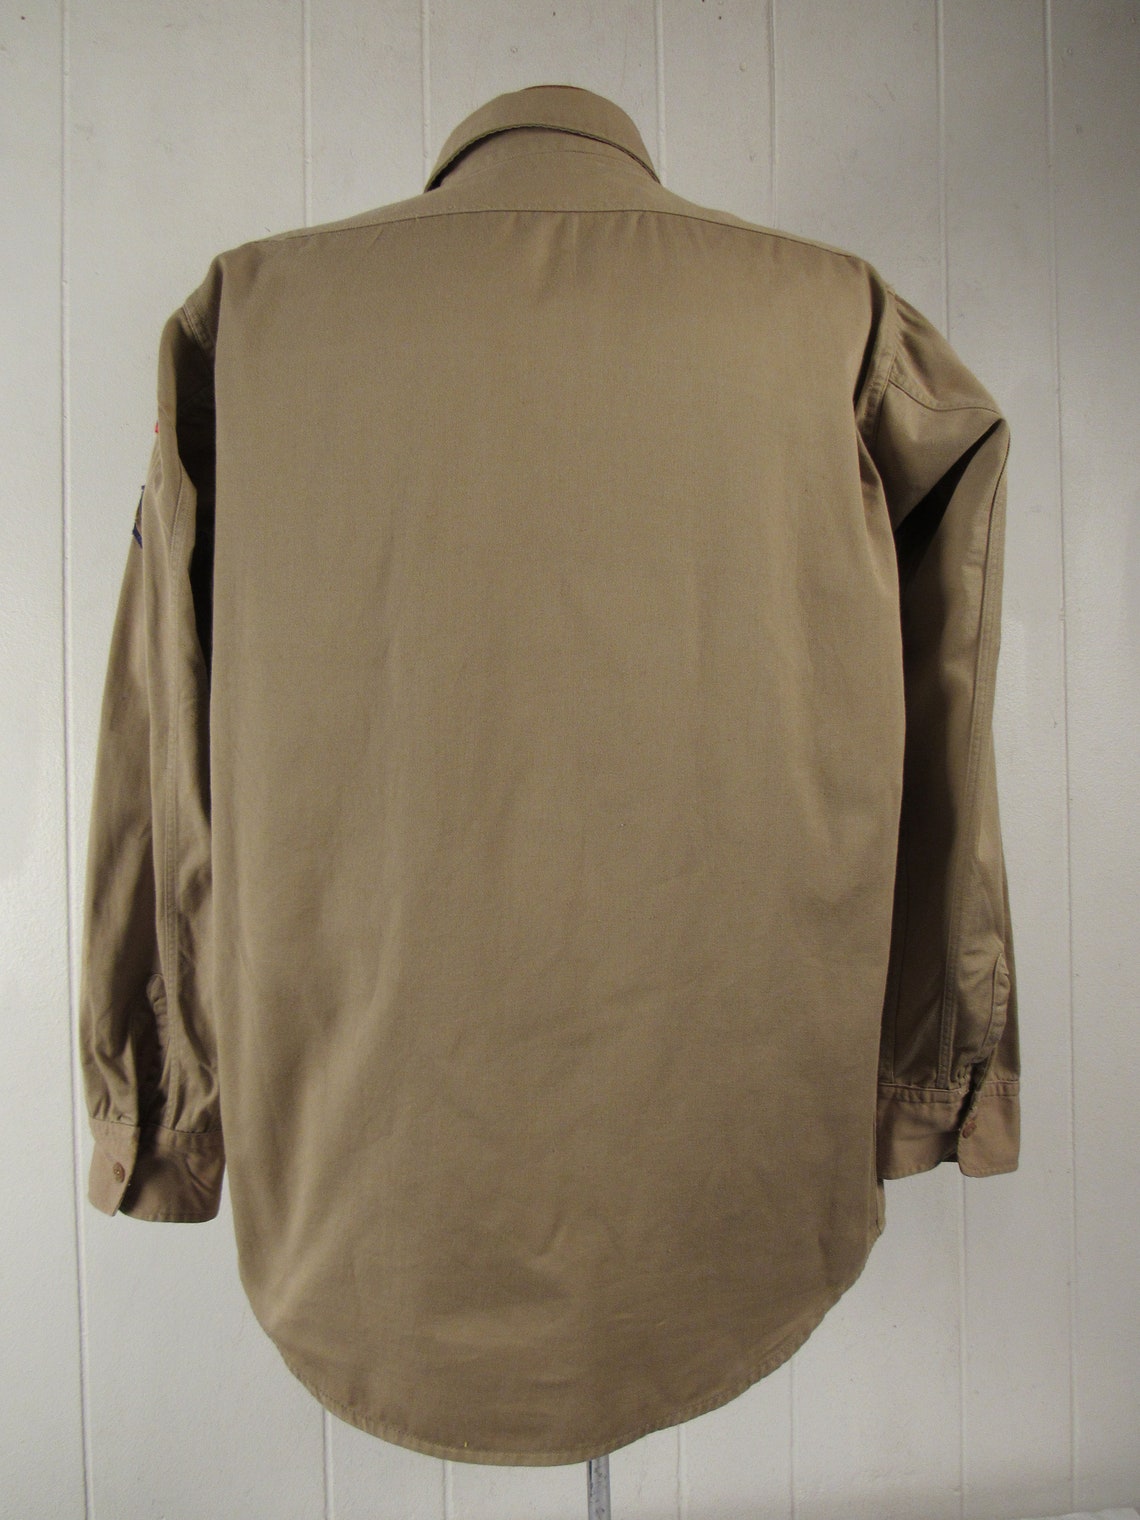 Vintage shirt 1940s shirt vintage work shirt khaki cotton | Etsy